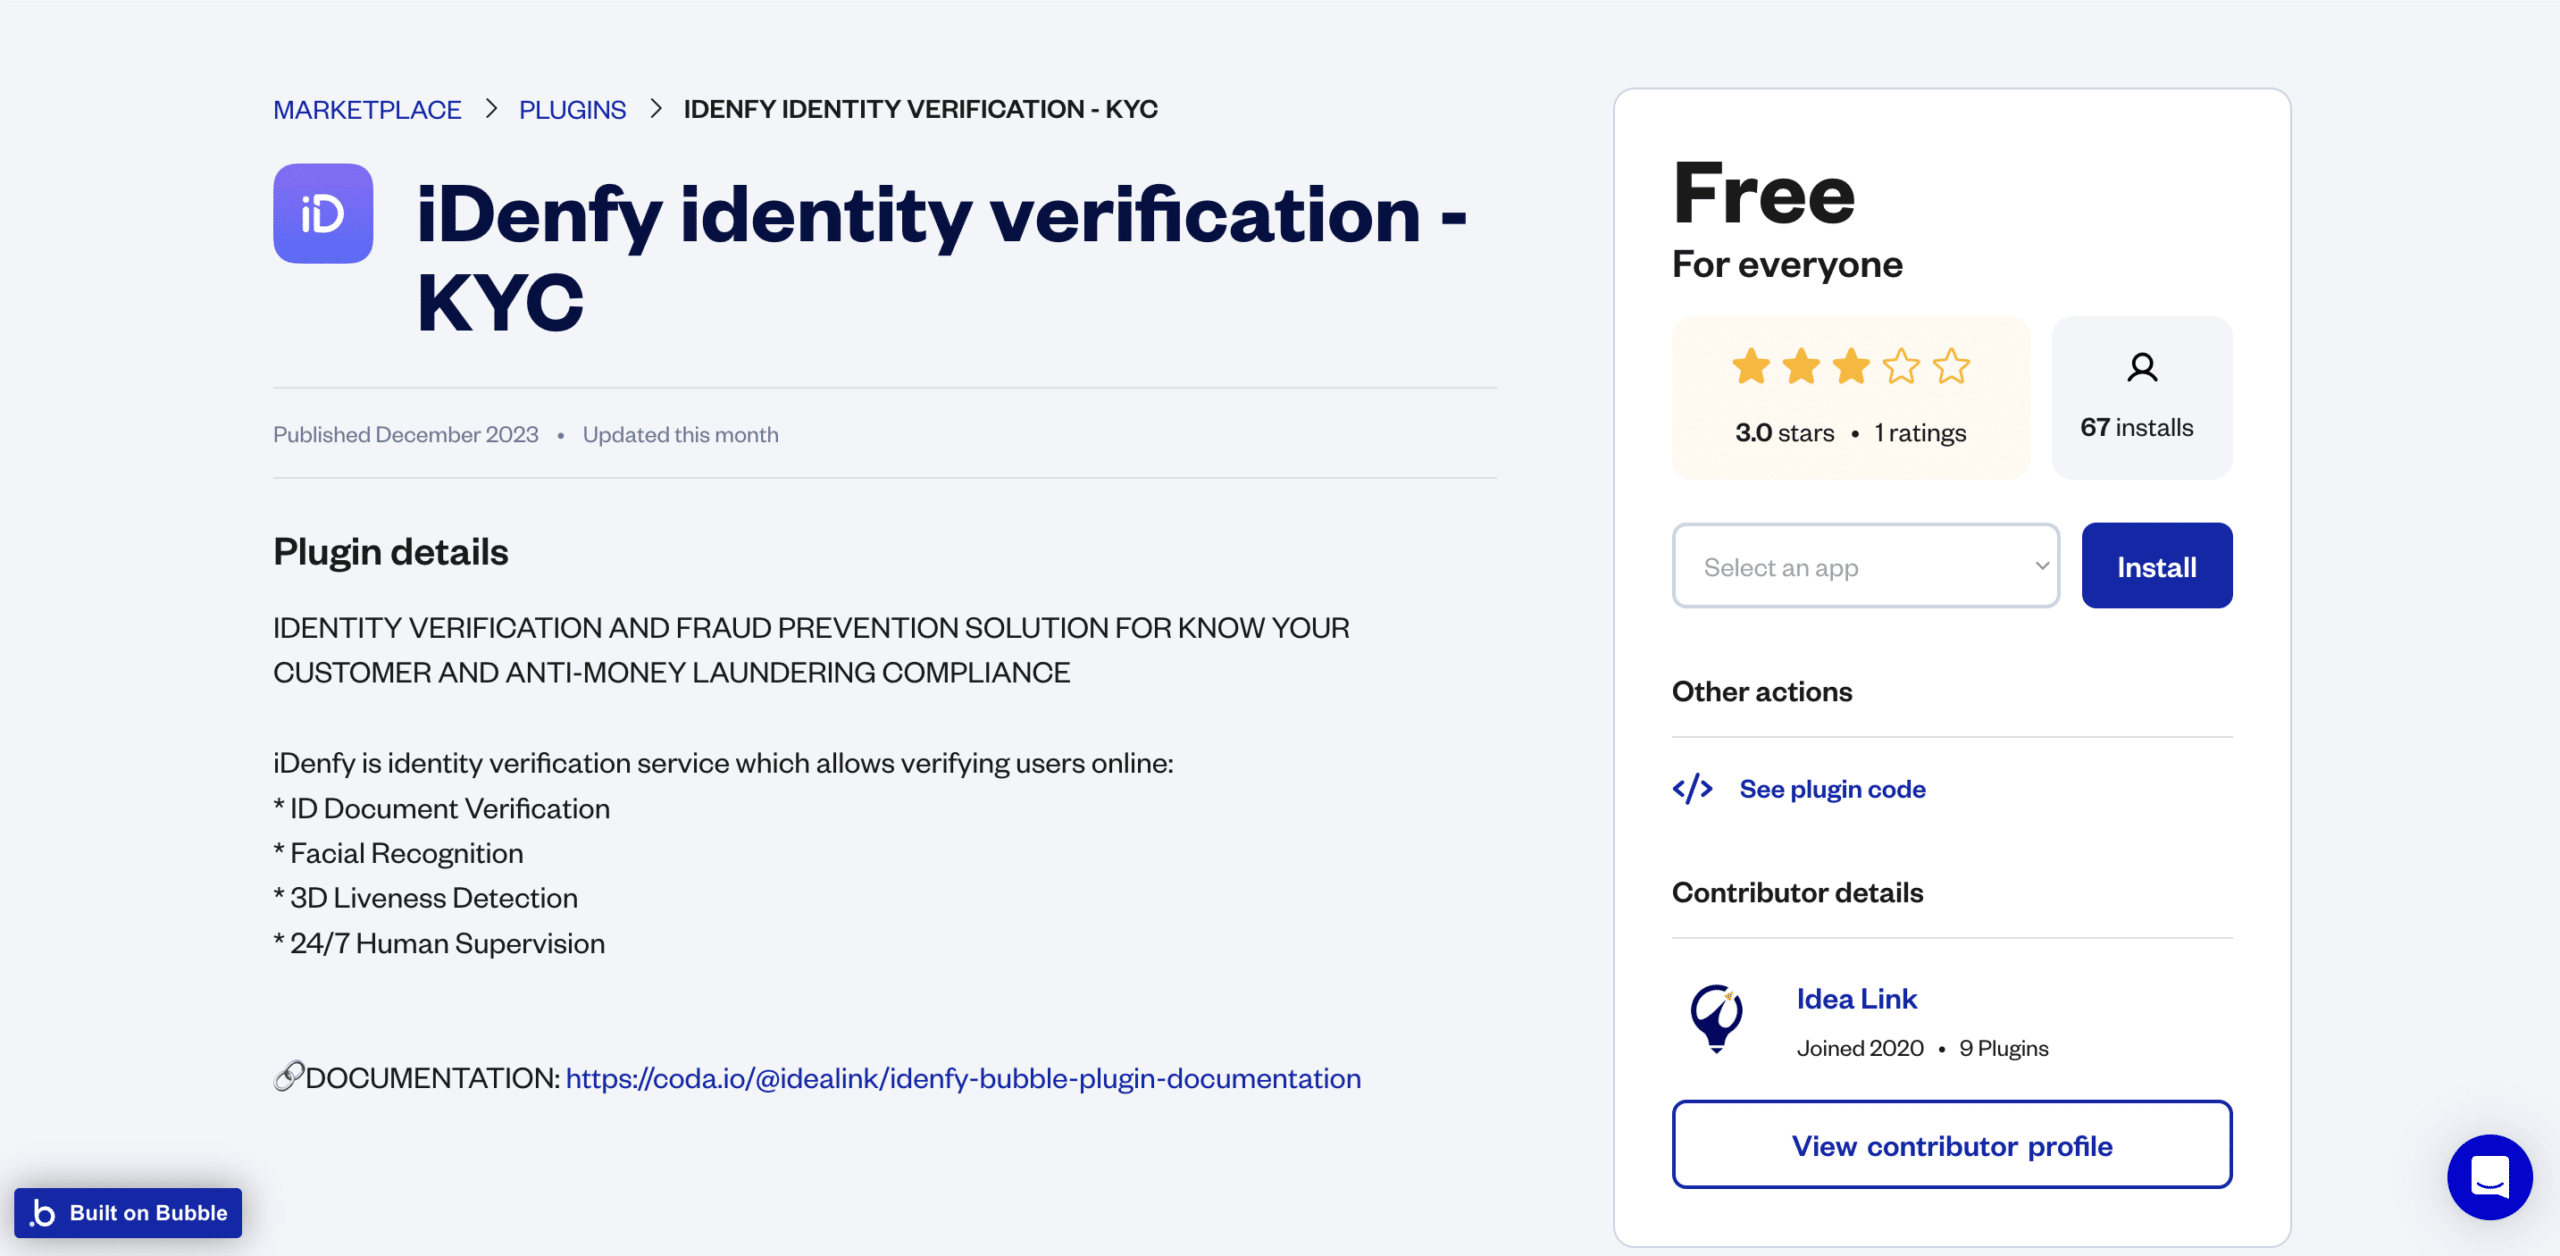 iDenfy identity verification - KYC